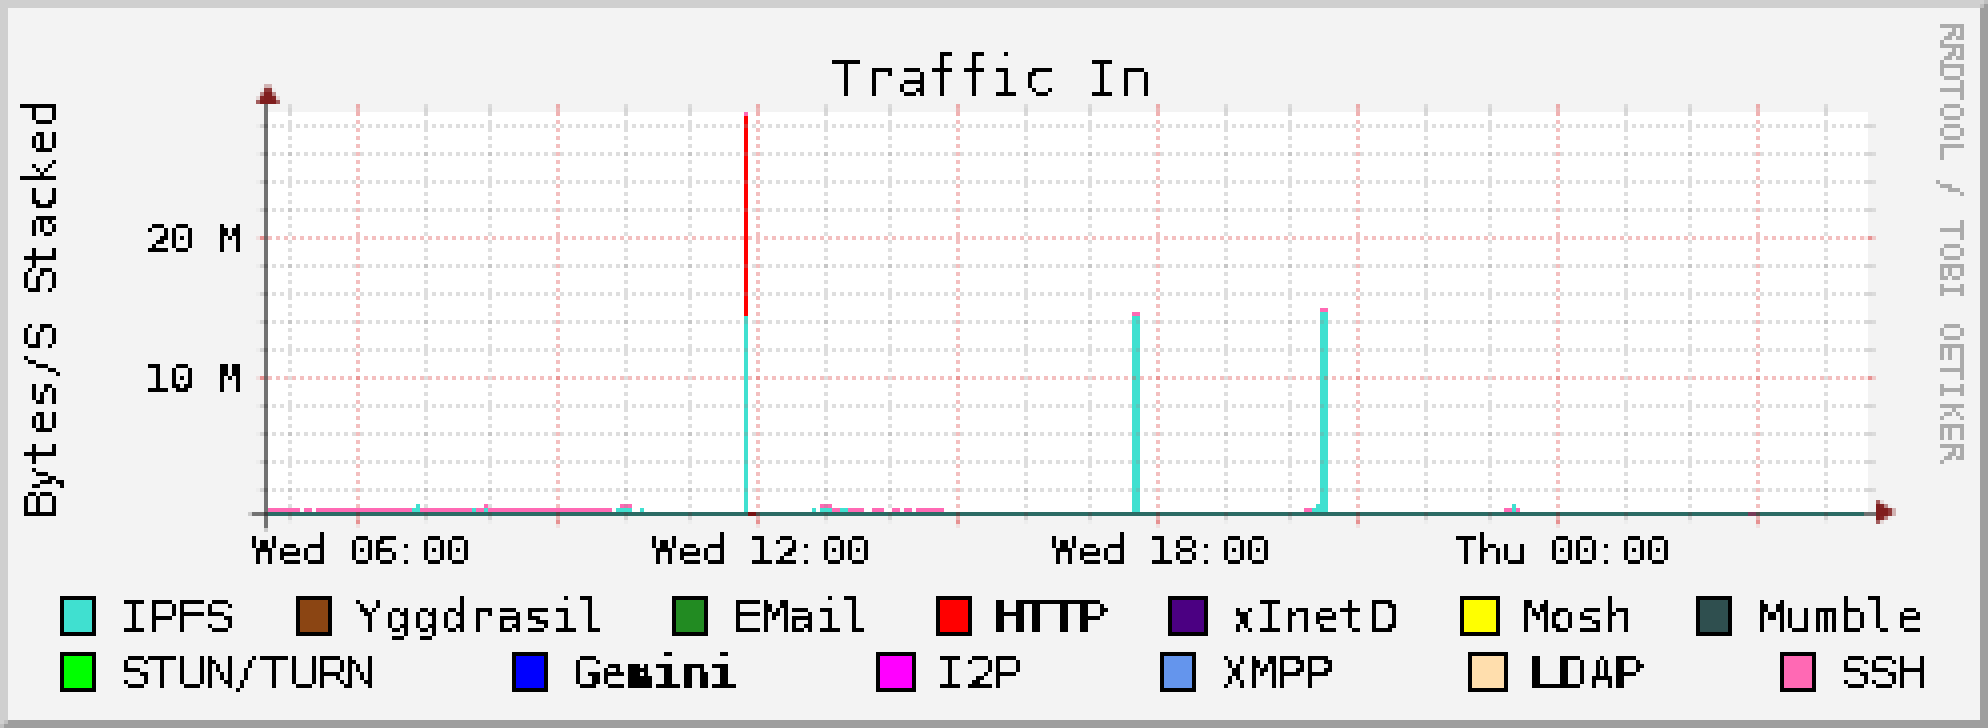 Traffic in graph